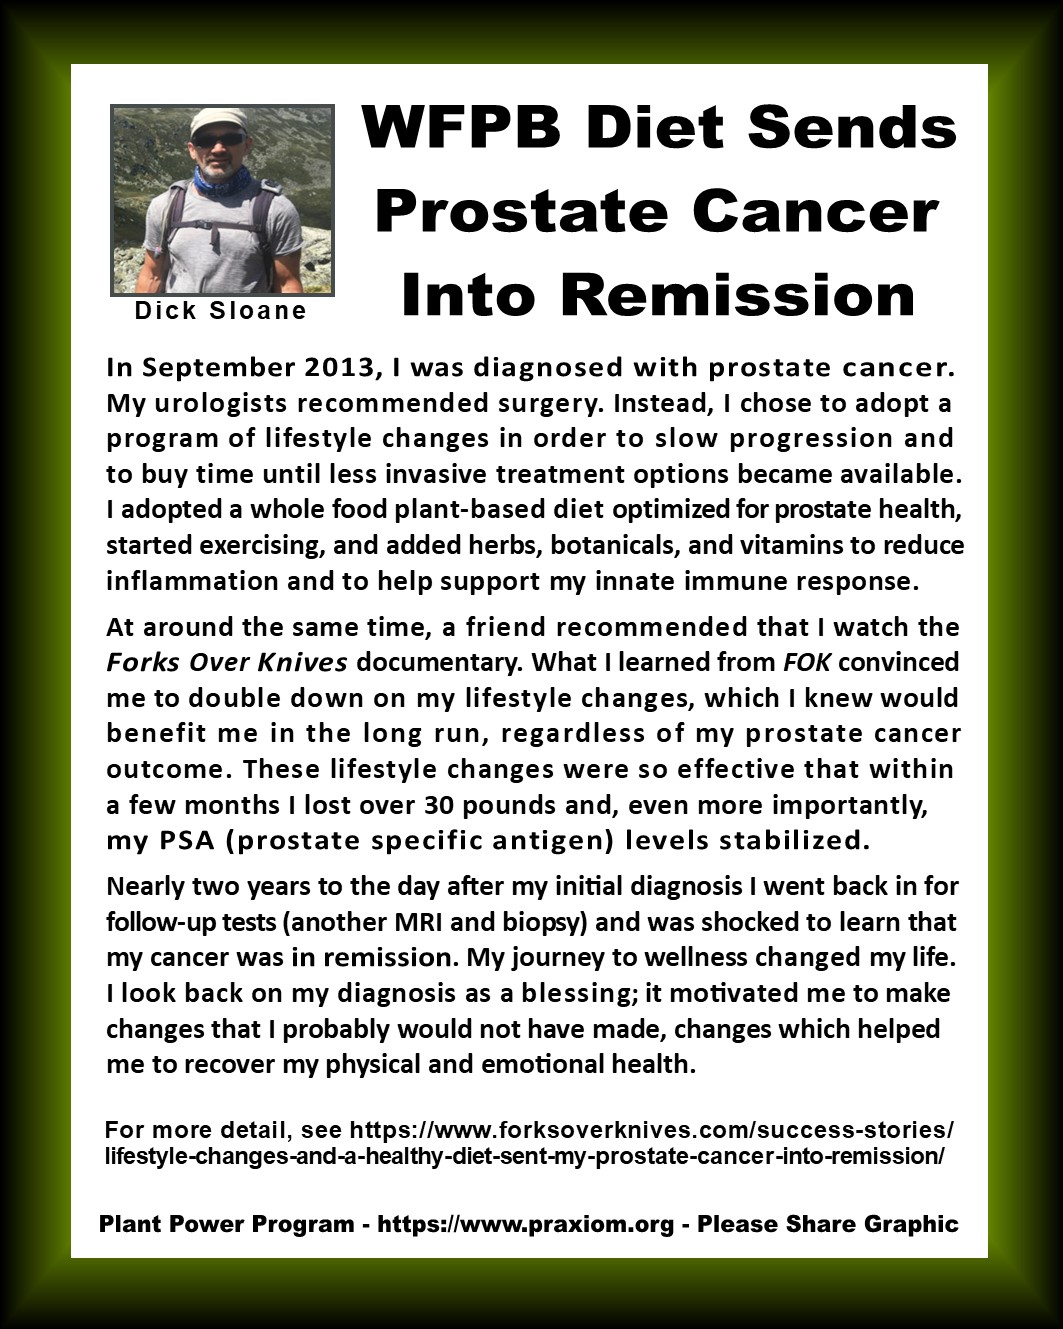 WFPB Sends Prostate Cancer into Remission - Dick Sloane